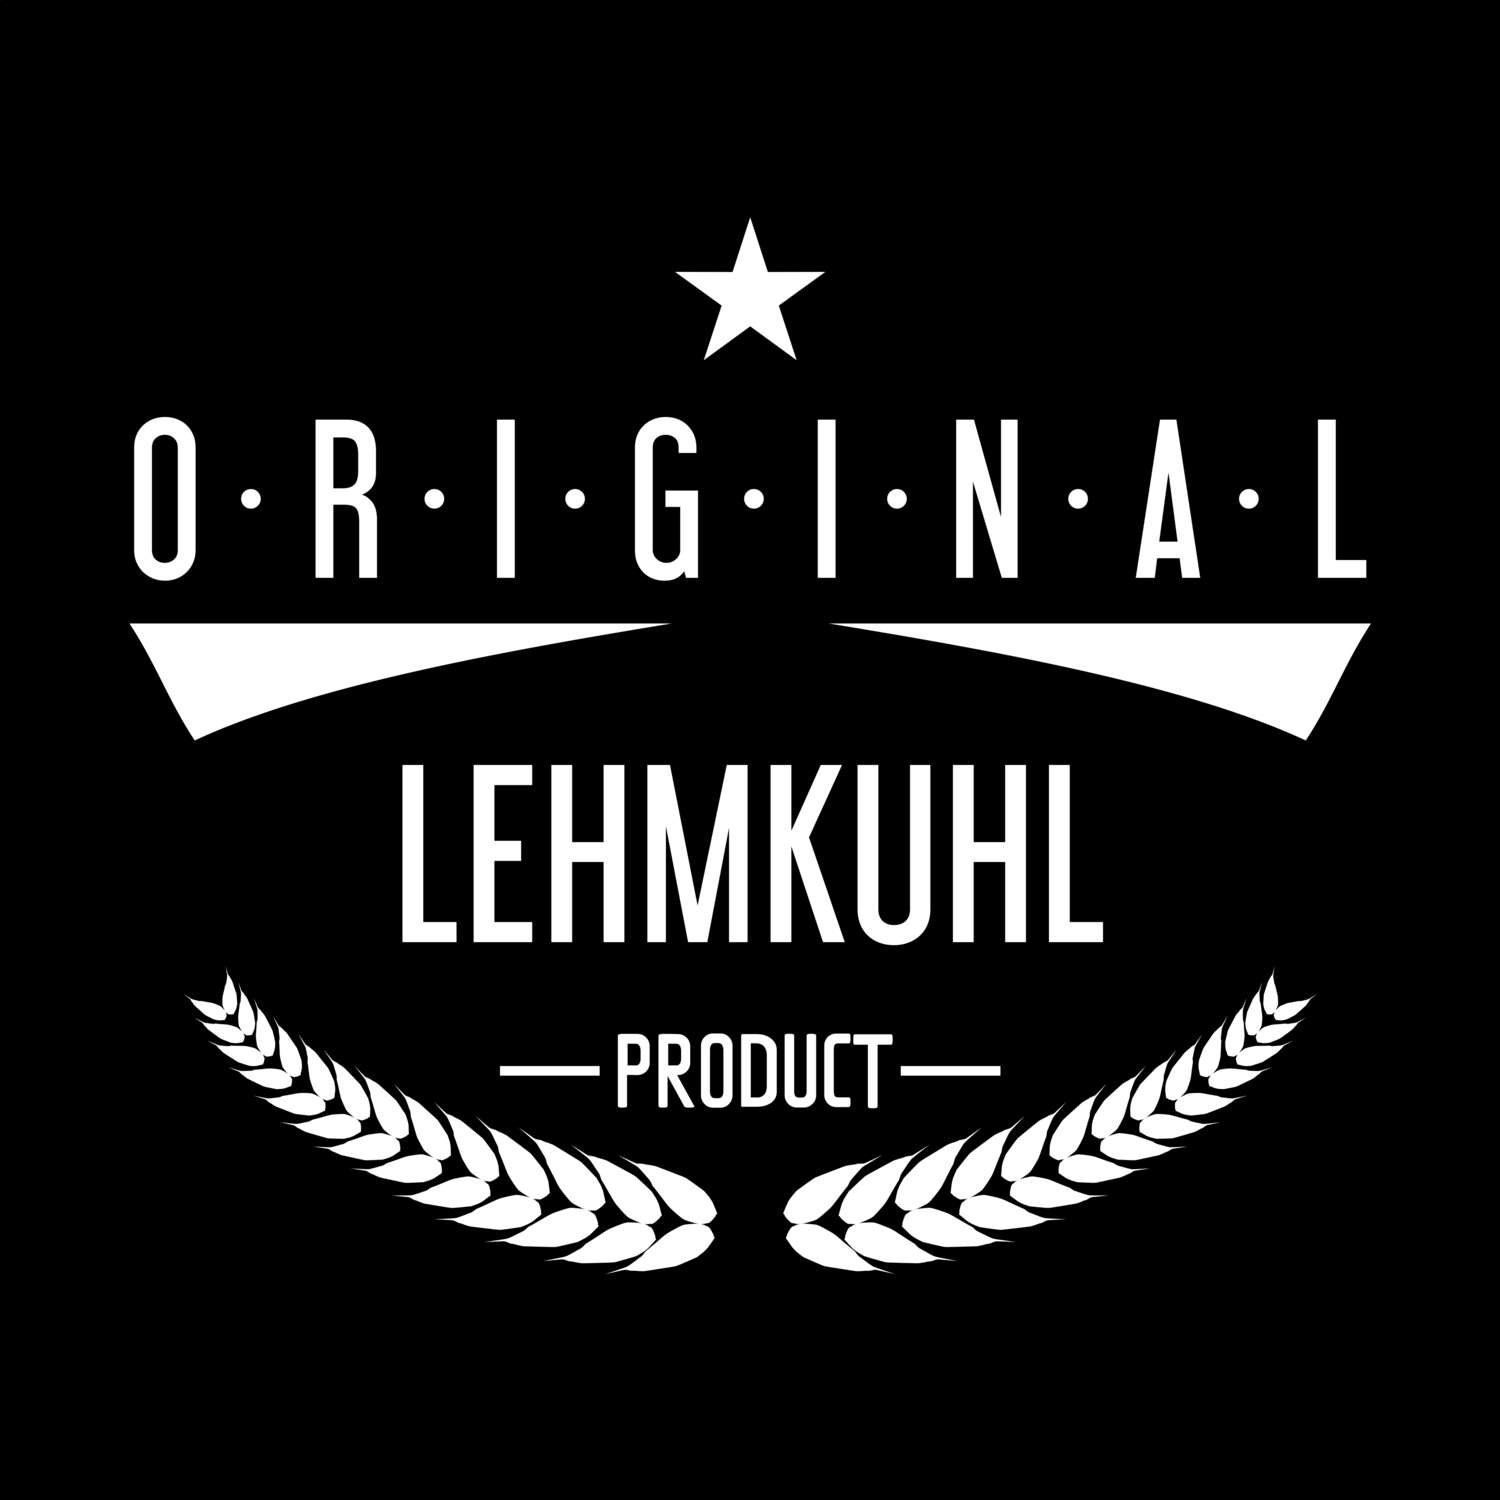 Lehmkuhl T-Shirt »Original Product«